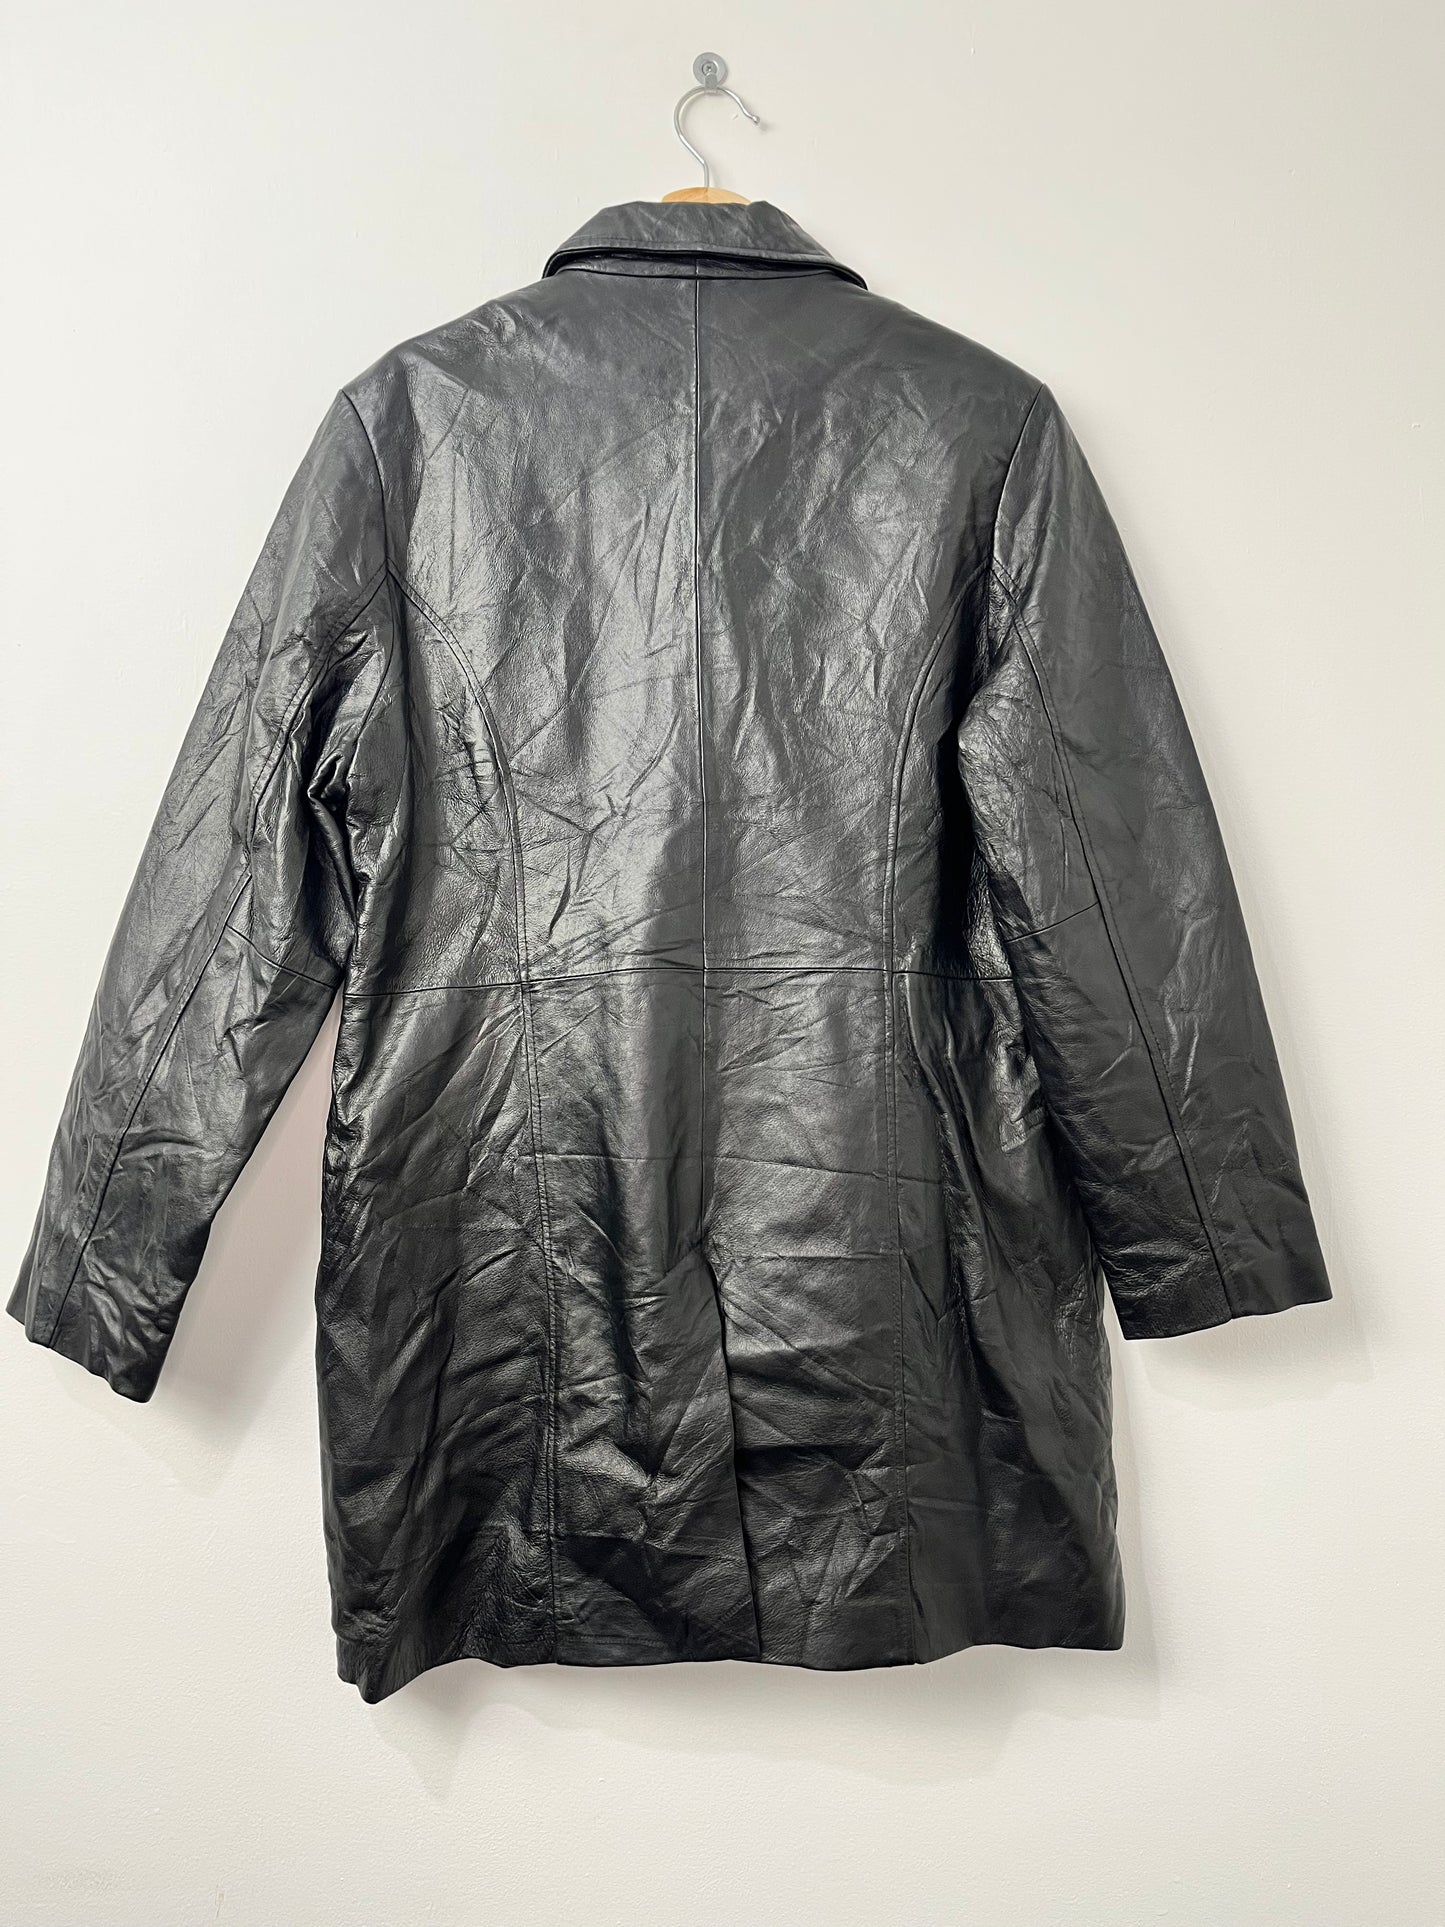 Phase Two Vintage Leather Jacket